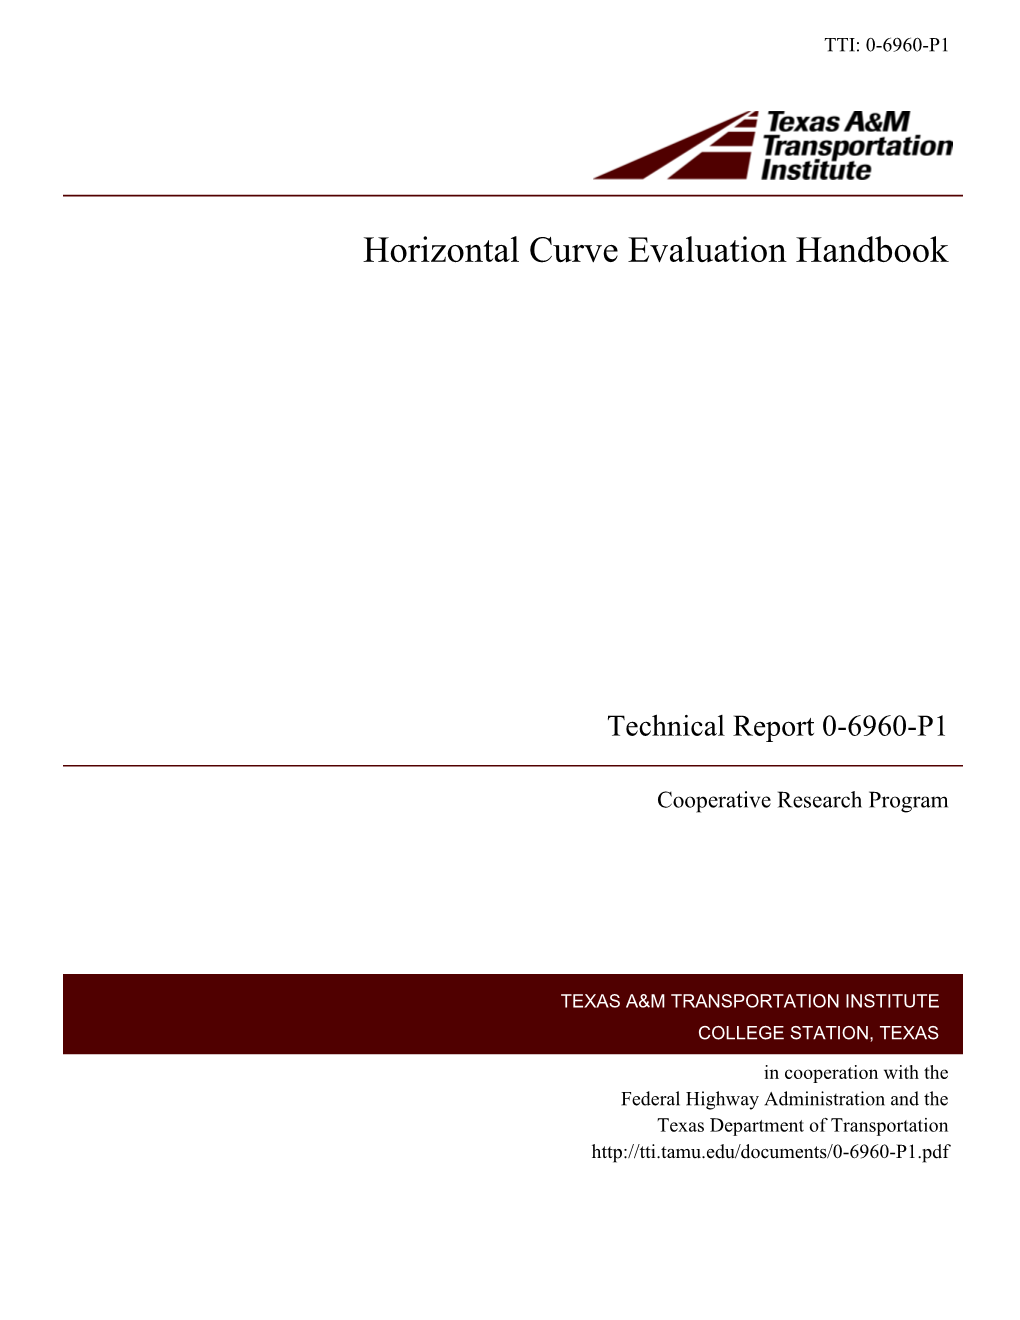 Horizontal Curve Evaluation Handbook